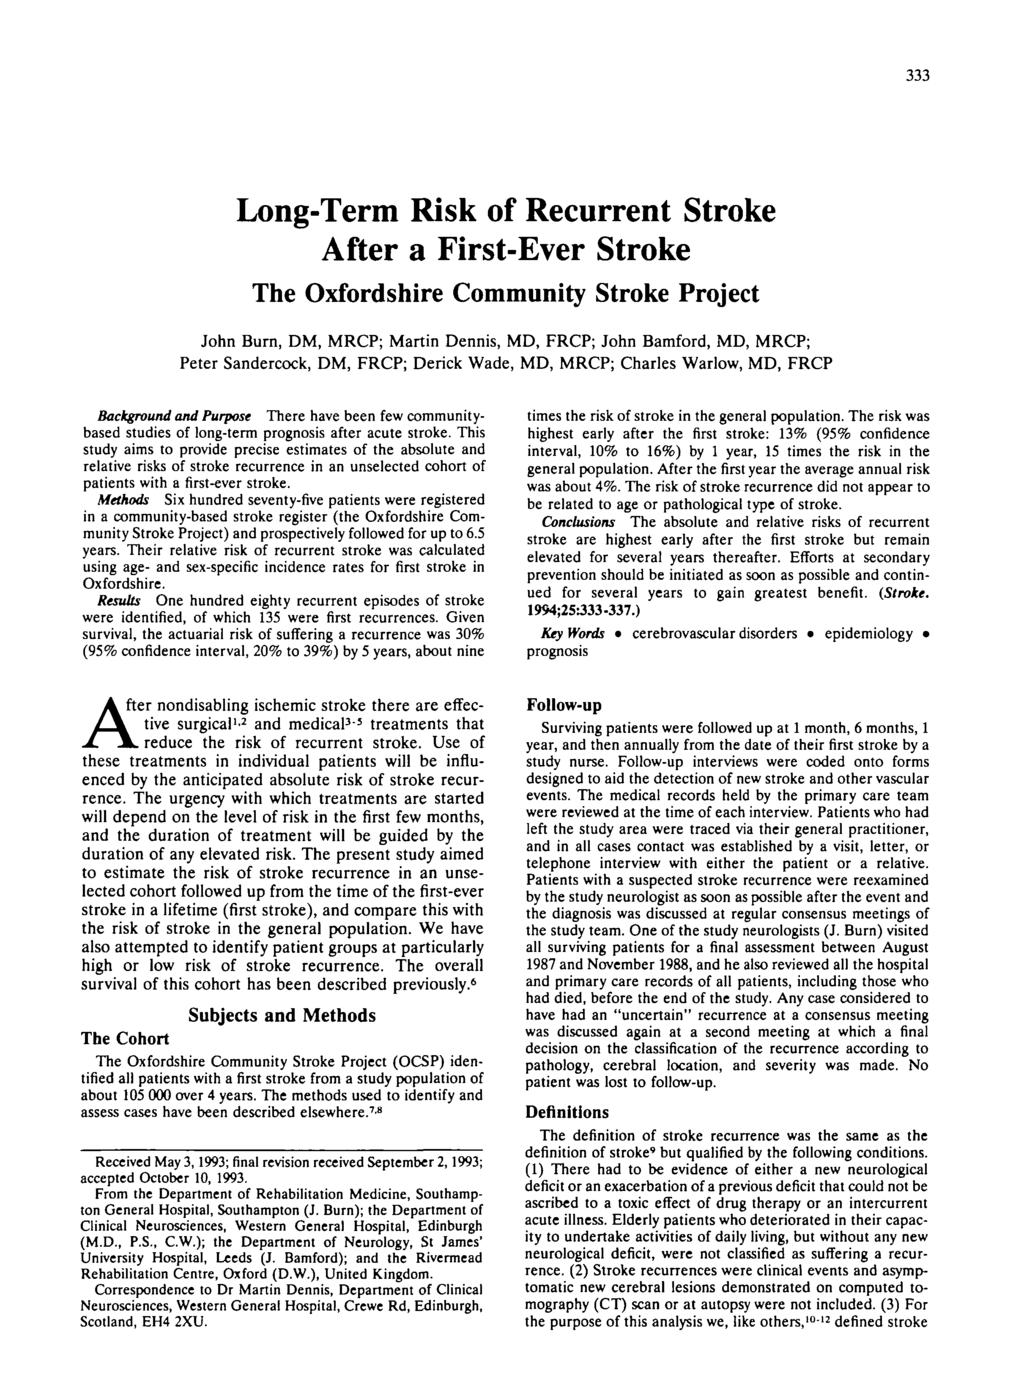 Long-Term Risk of Recurrent Stroke After a First-Ever Stroke The Oxfordshire Community Stroke Project John Burn, DM, MRCP; Martin Dennis, MD, FRCP; John Bamford, MD, MRCP; Peter Sandercock, DM, FRCP;